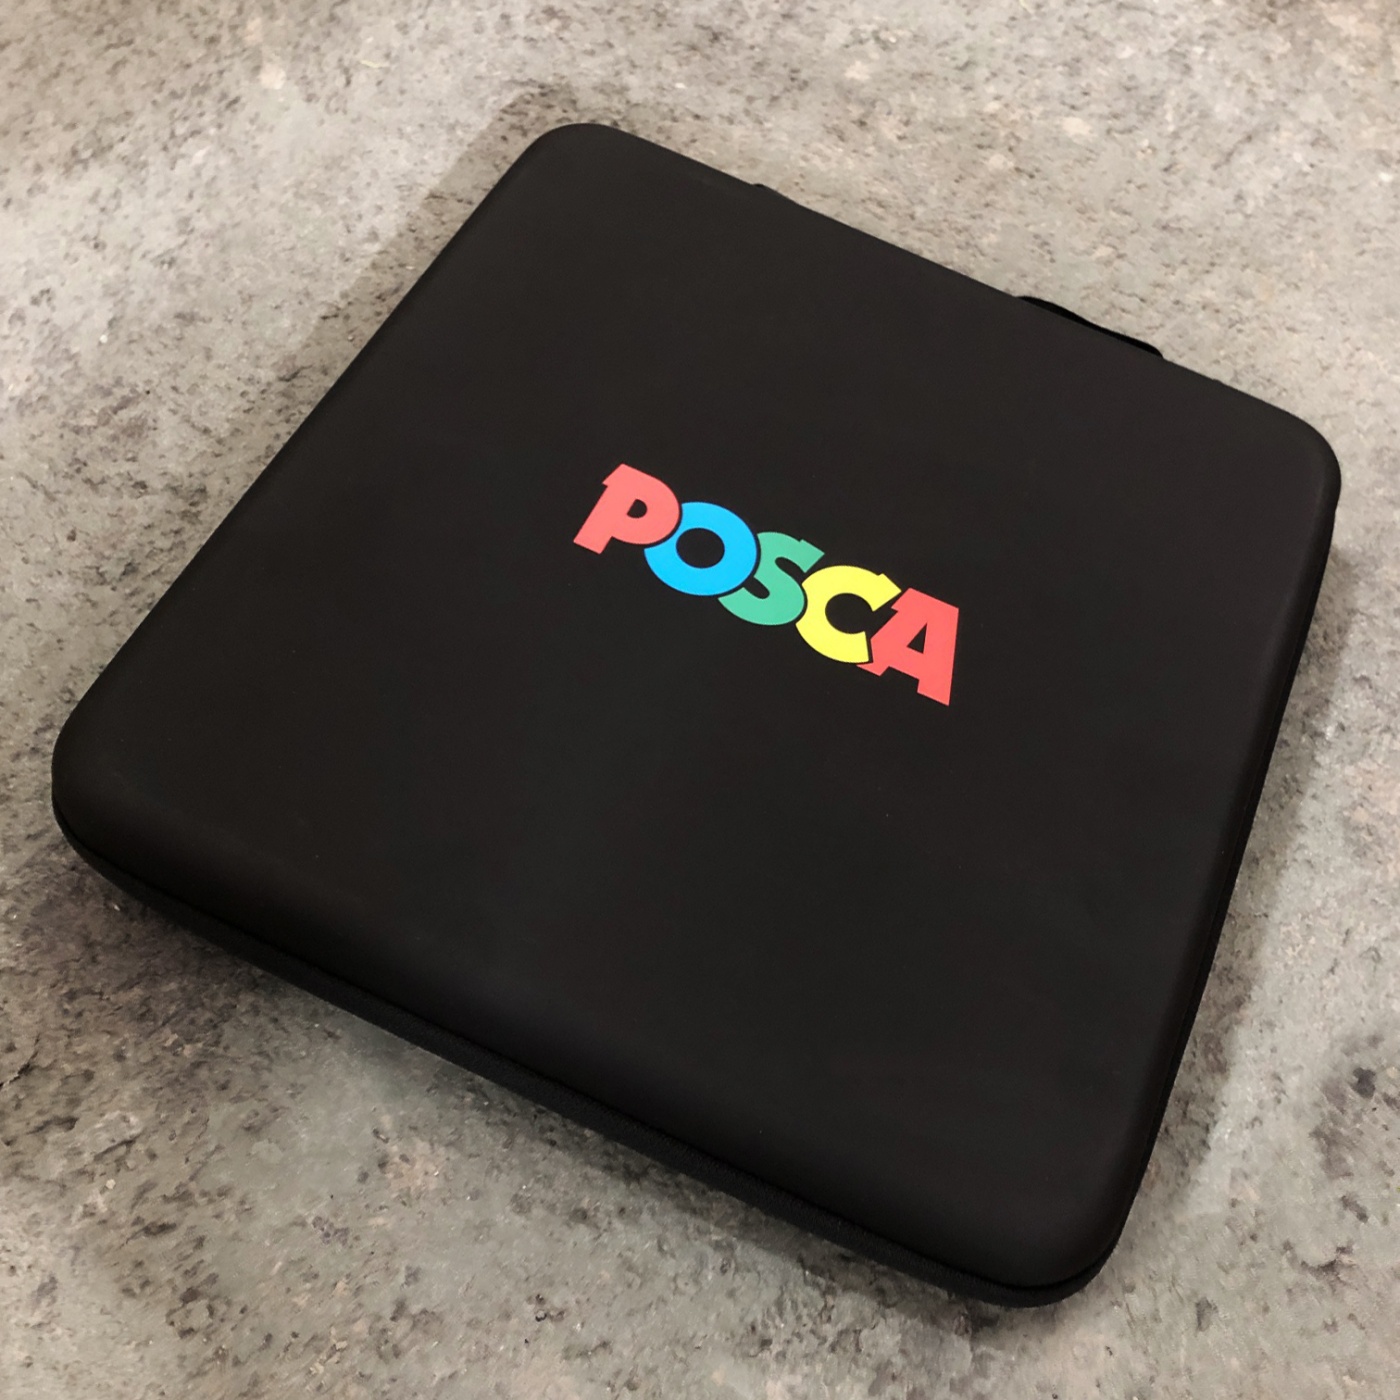 PoscART POSCA Large Storage Case Kit Including A Set Of 60 Markers